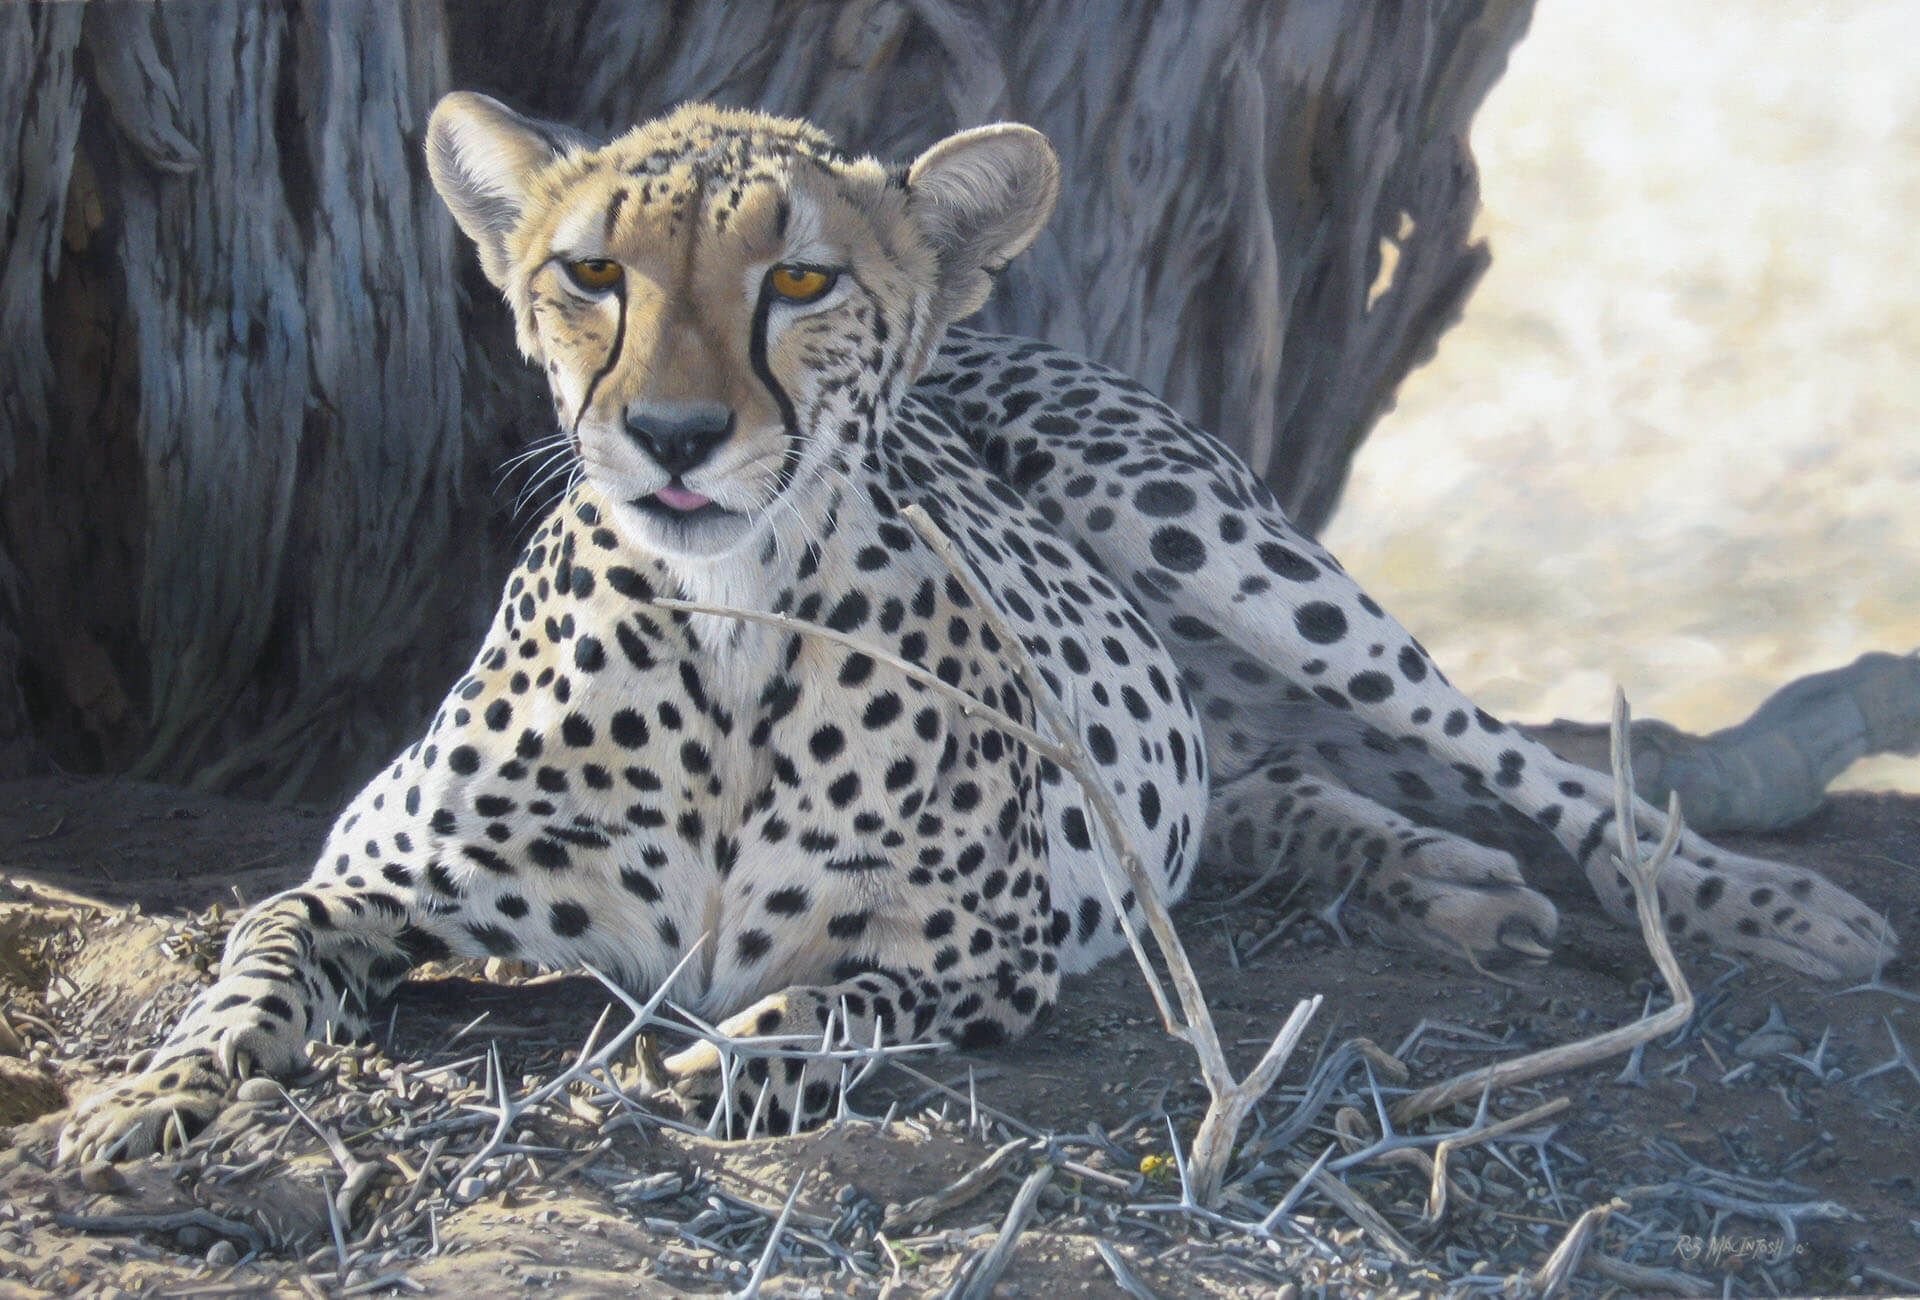 Photorealistic painting of a cheetah